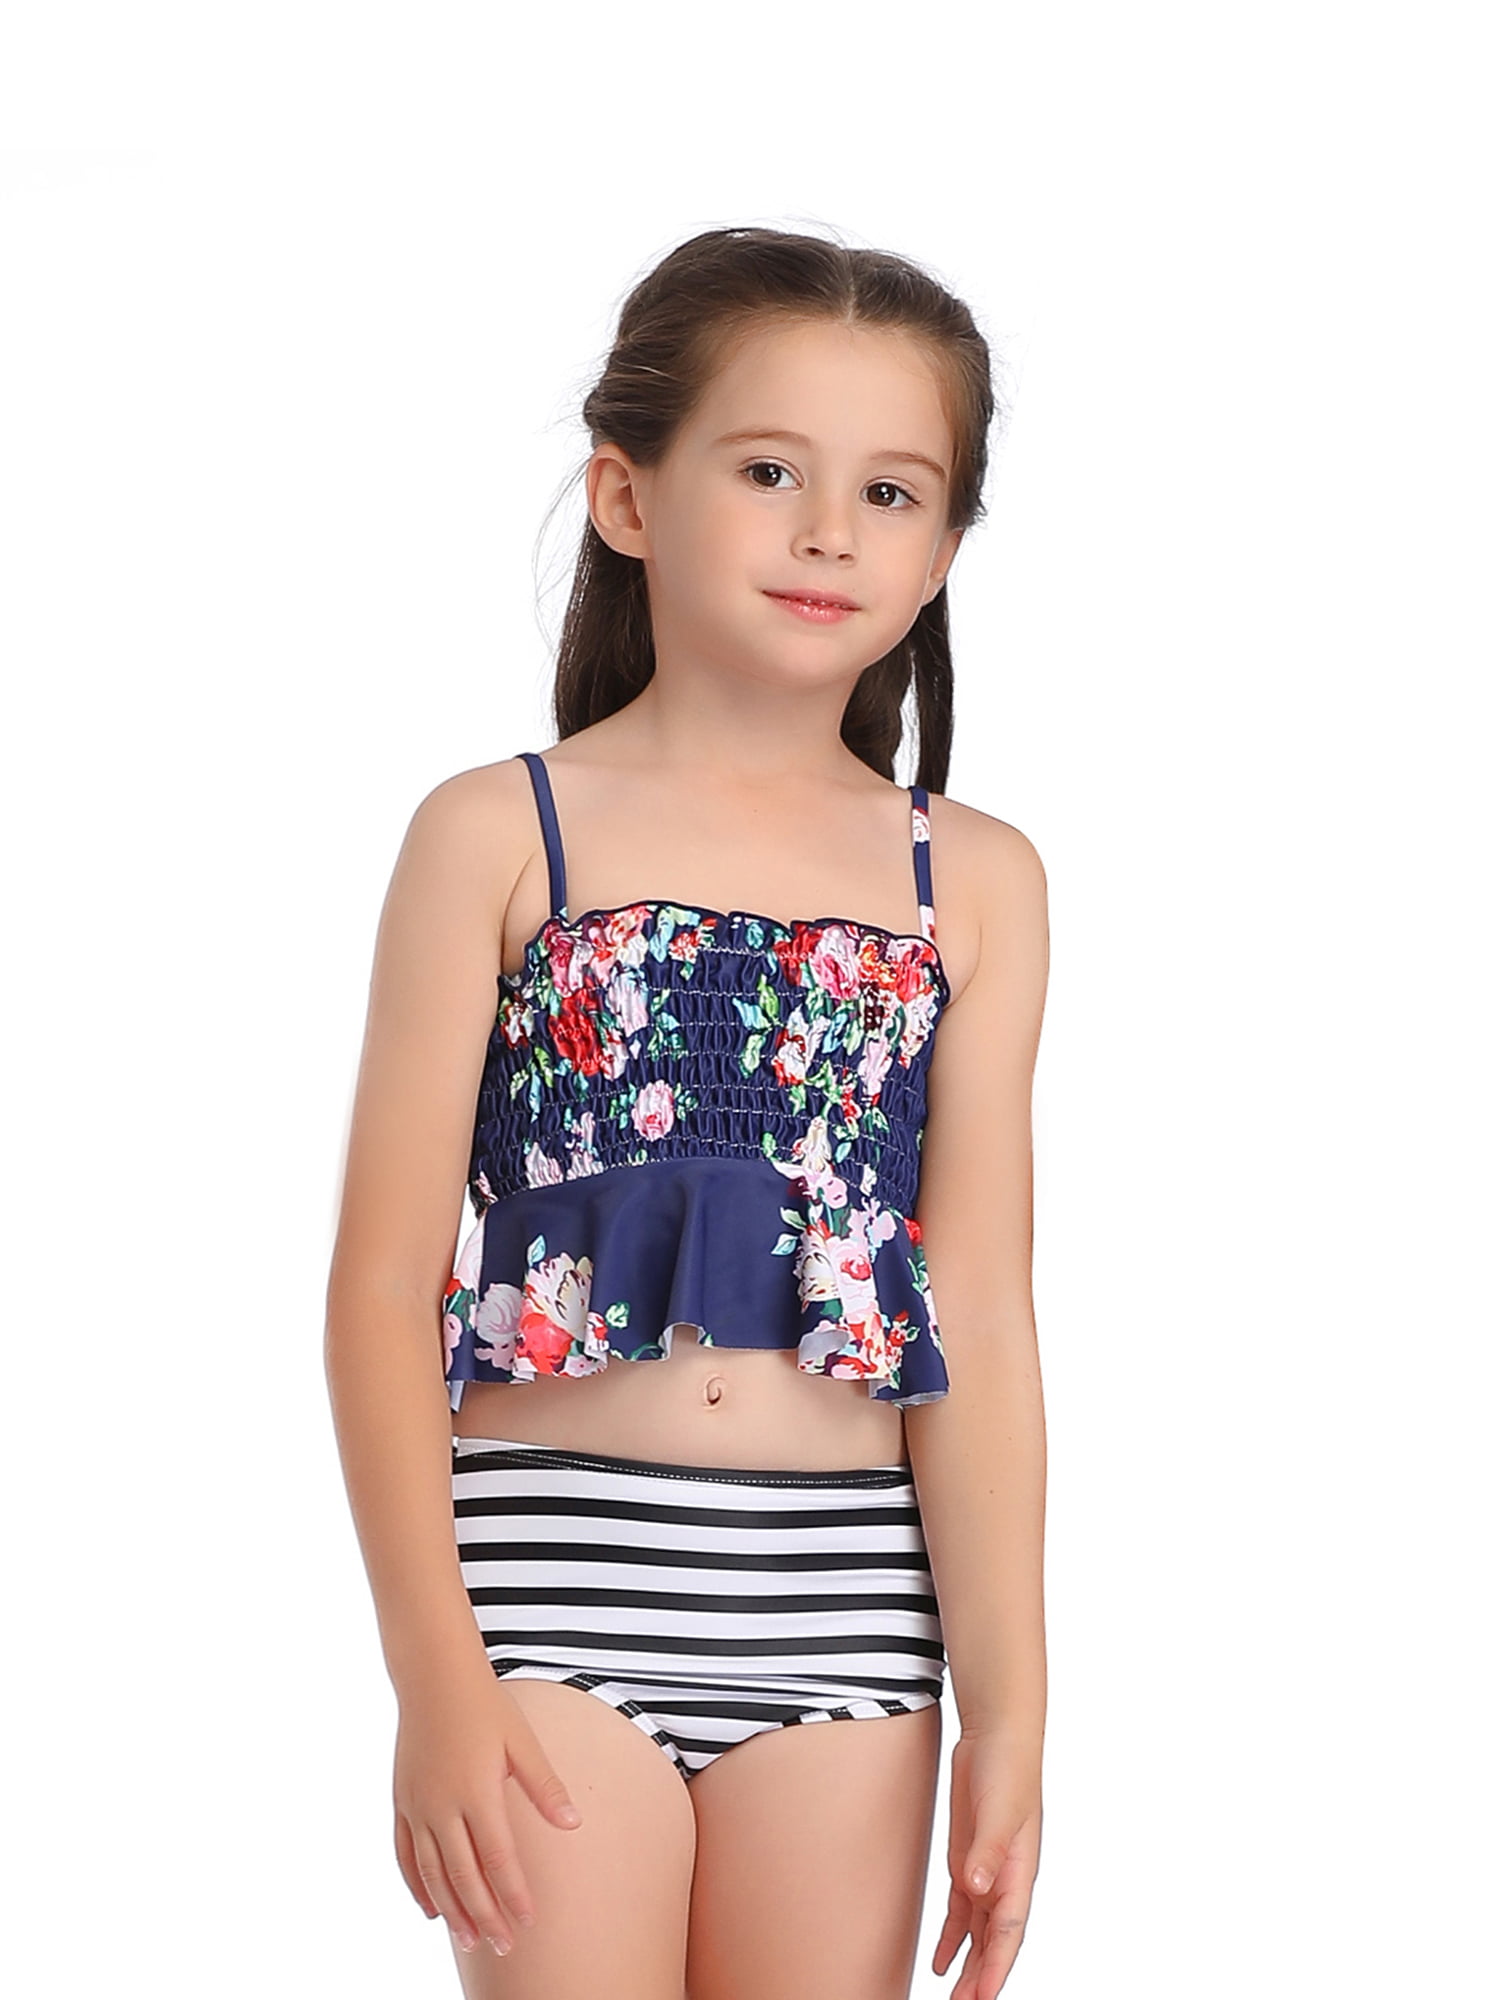 Kids Toddler Swimsuit for Girls Moana 2 Piece Swimming Bathing Bikini Summer New 